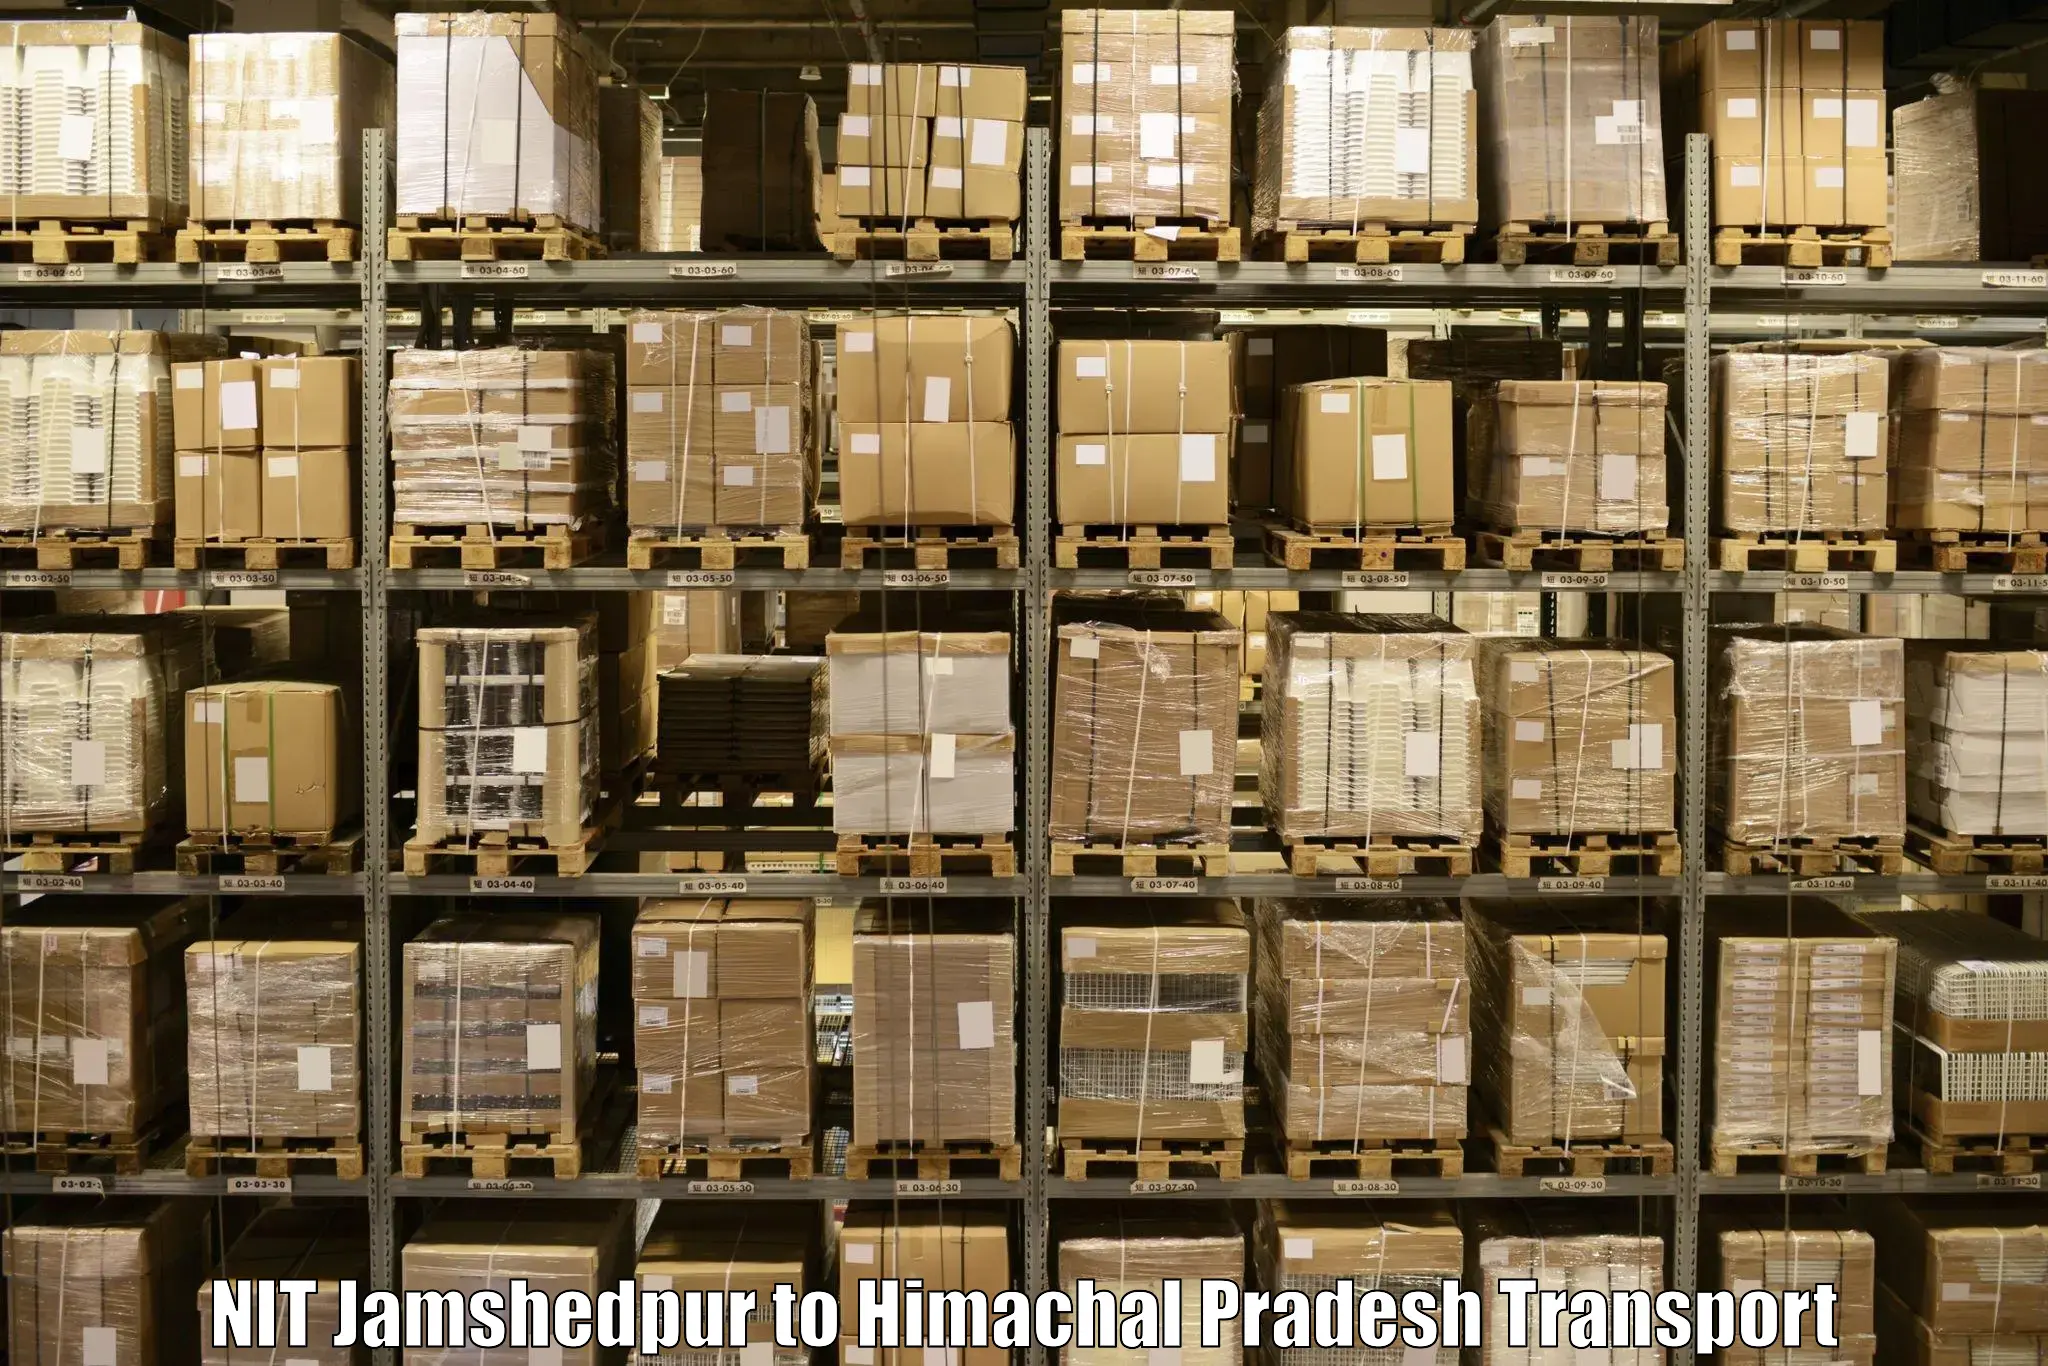 Shipping partner NIT Jamshedpur to Ranital